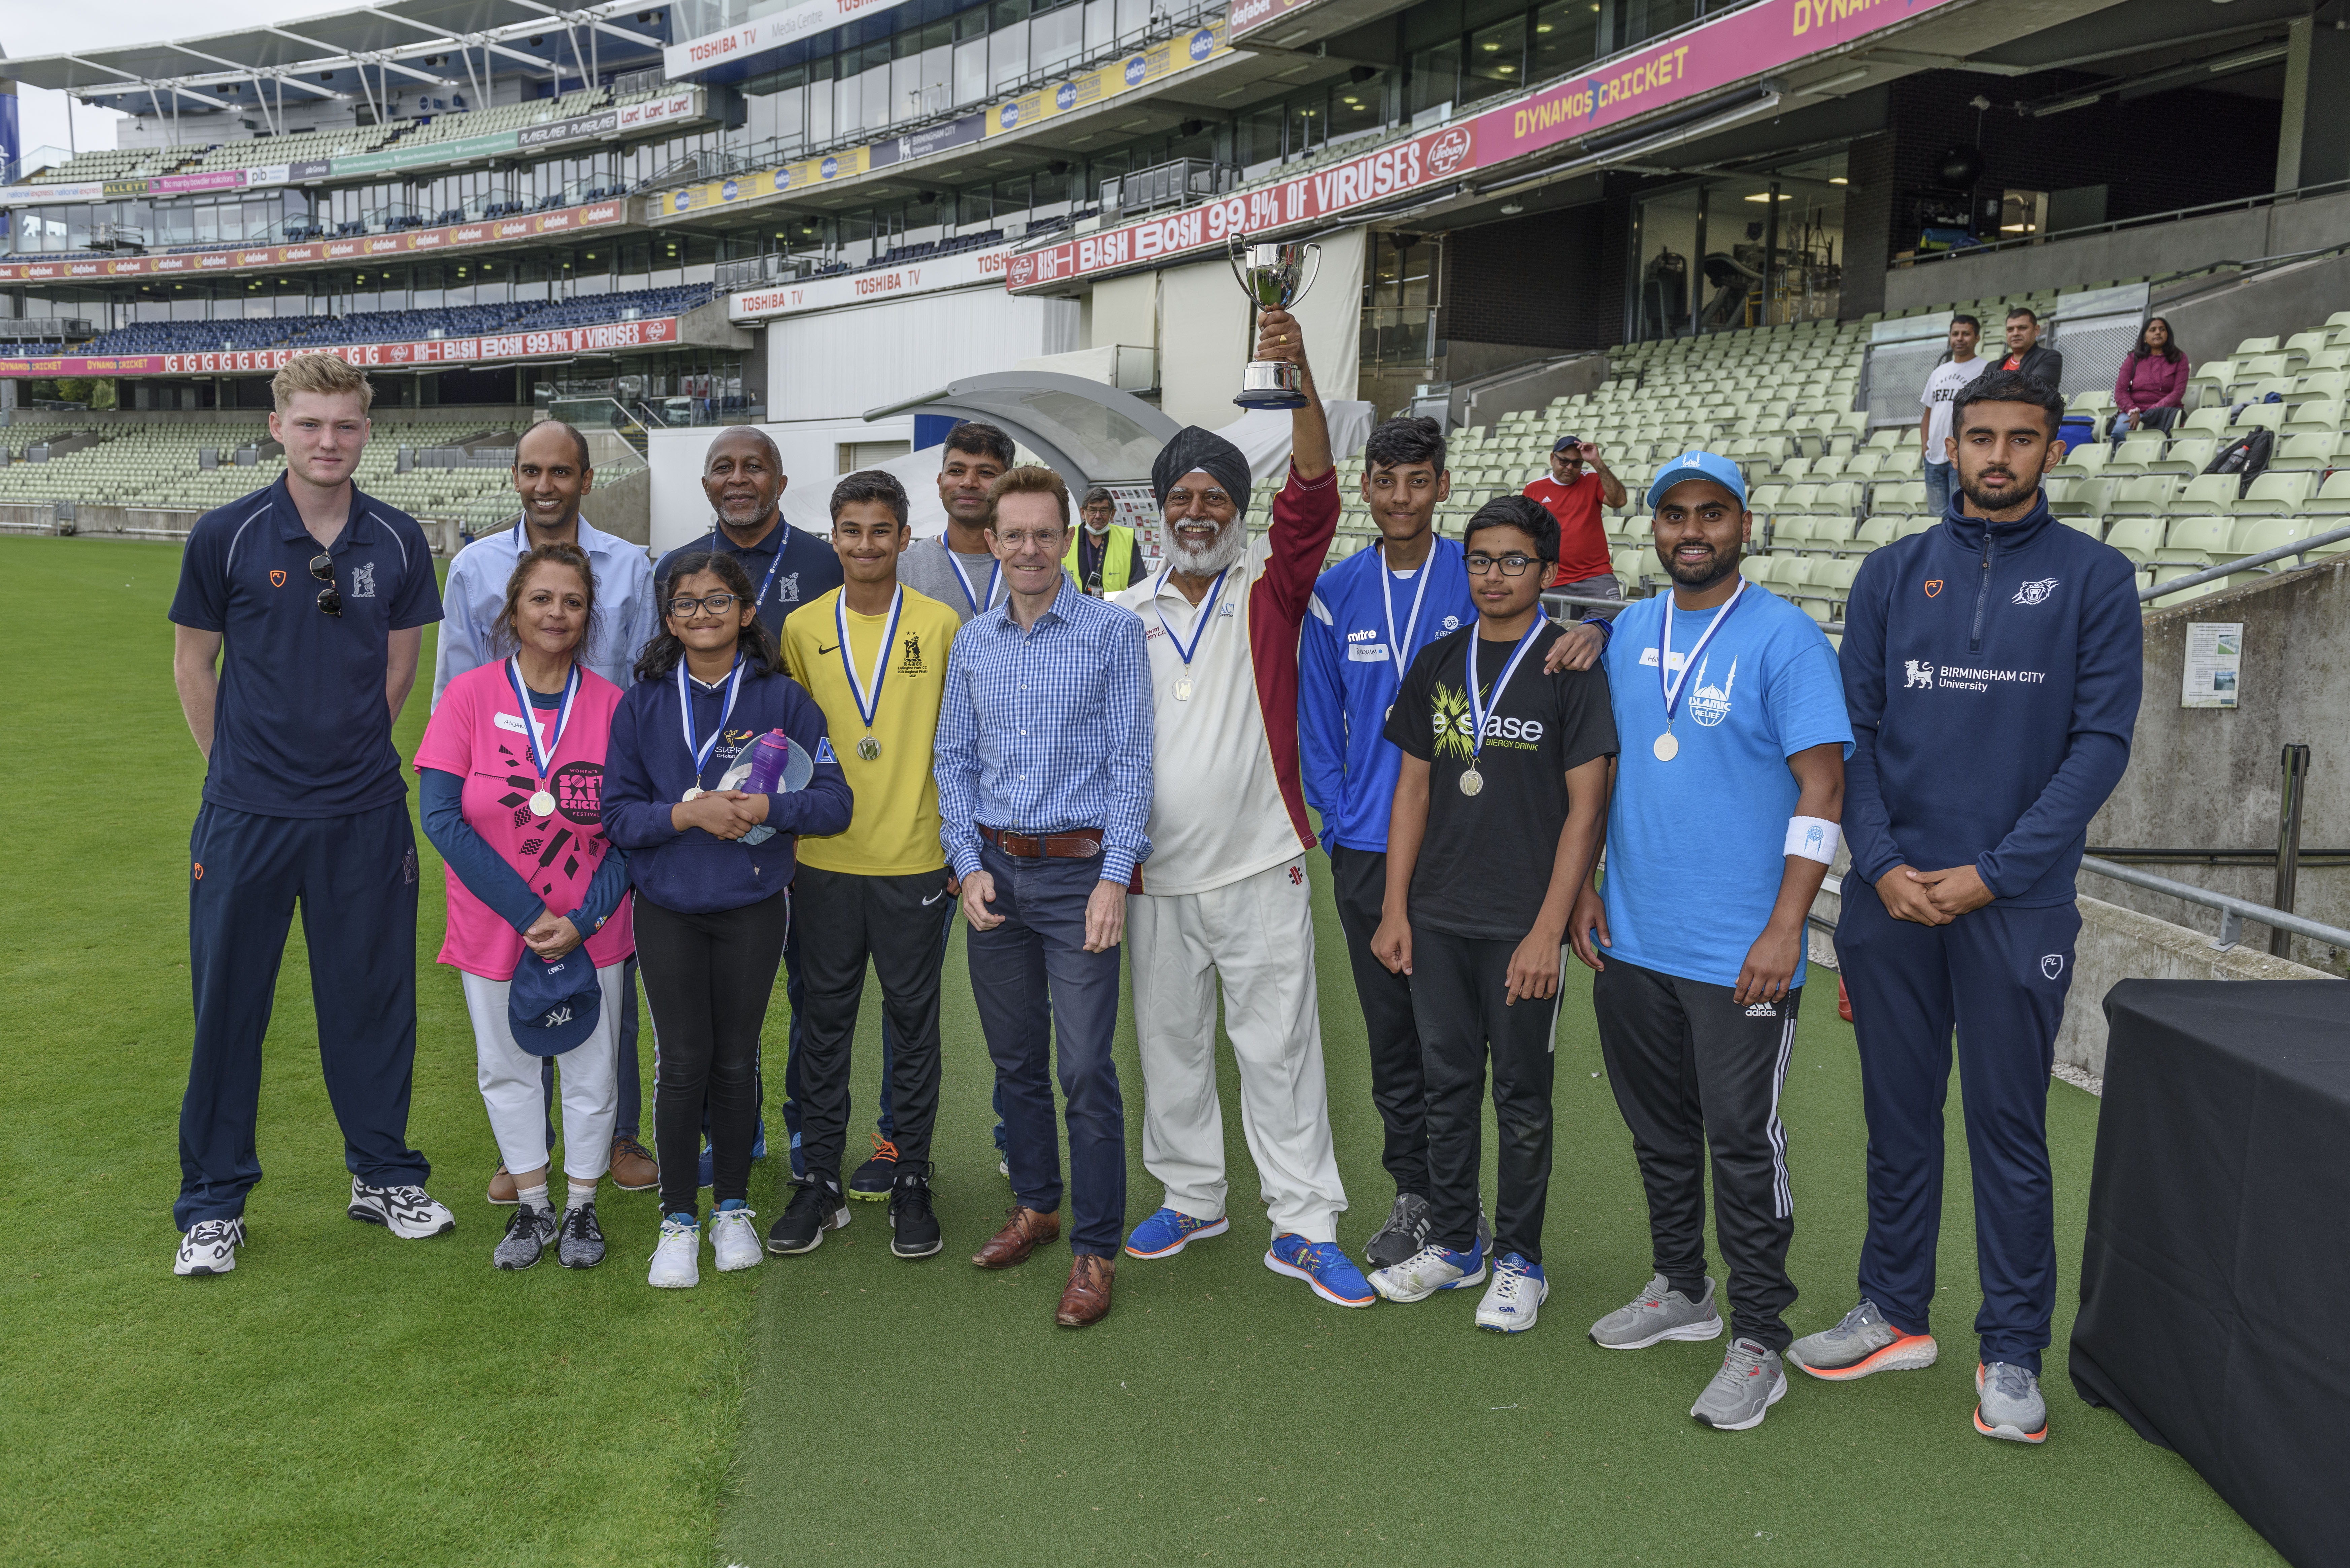 Dan Mousely (WCCA batsman), Ravi Masih (WCCC), Anjana Shelat (winning team), Deepak Chimania (winning team), Andy Street, Terlocan Singh (Captain winning team), Adbul Hannan (winning team), Manraj Johal (WCCC bowler) with younger members of the winning team